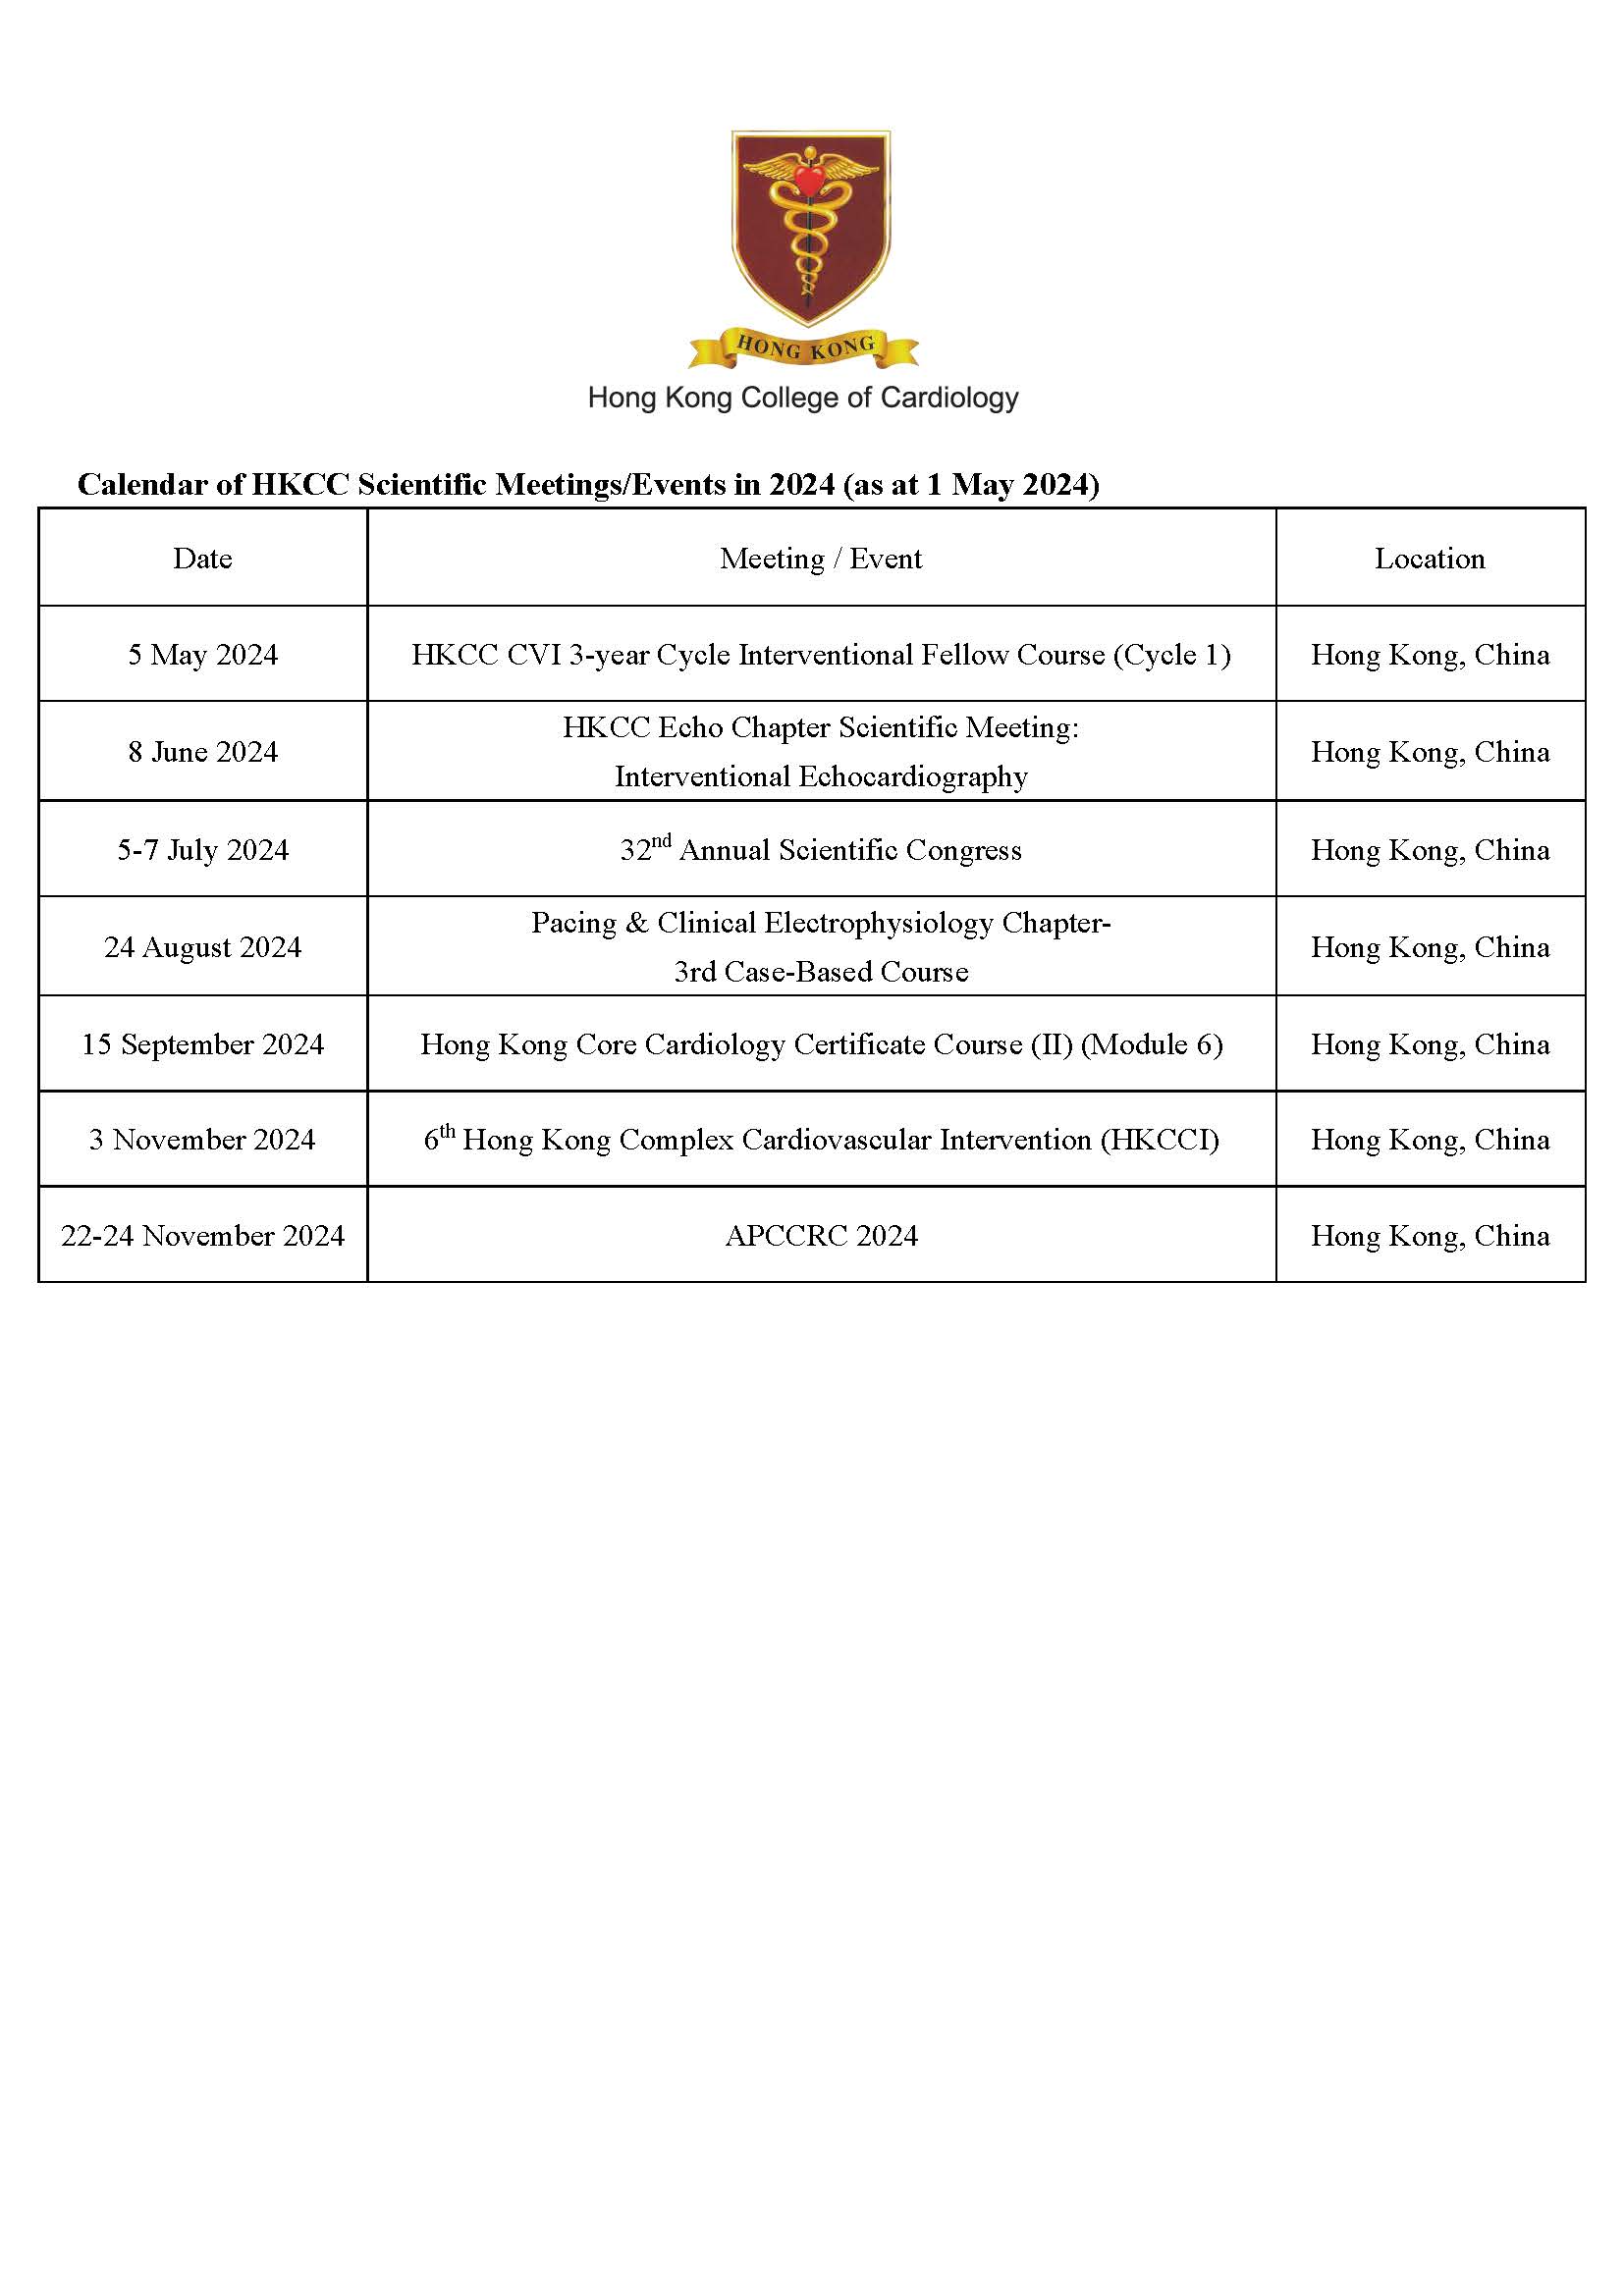 Calendar of HKCC Scientific Meetings / Events in 2024 (as at 1 June 2024)